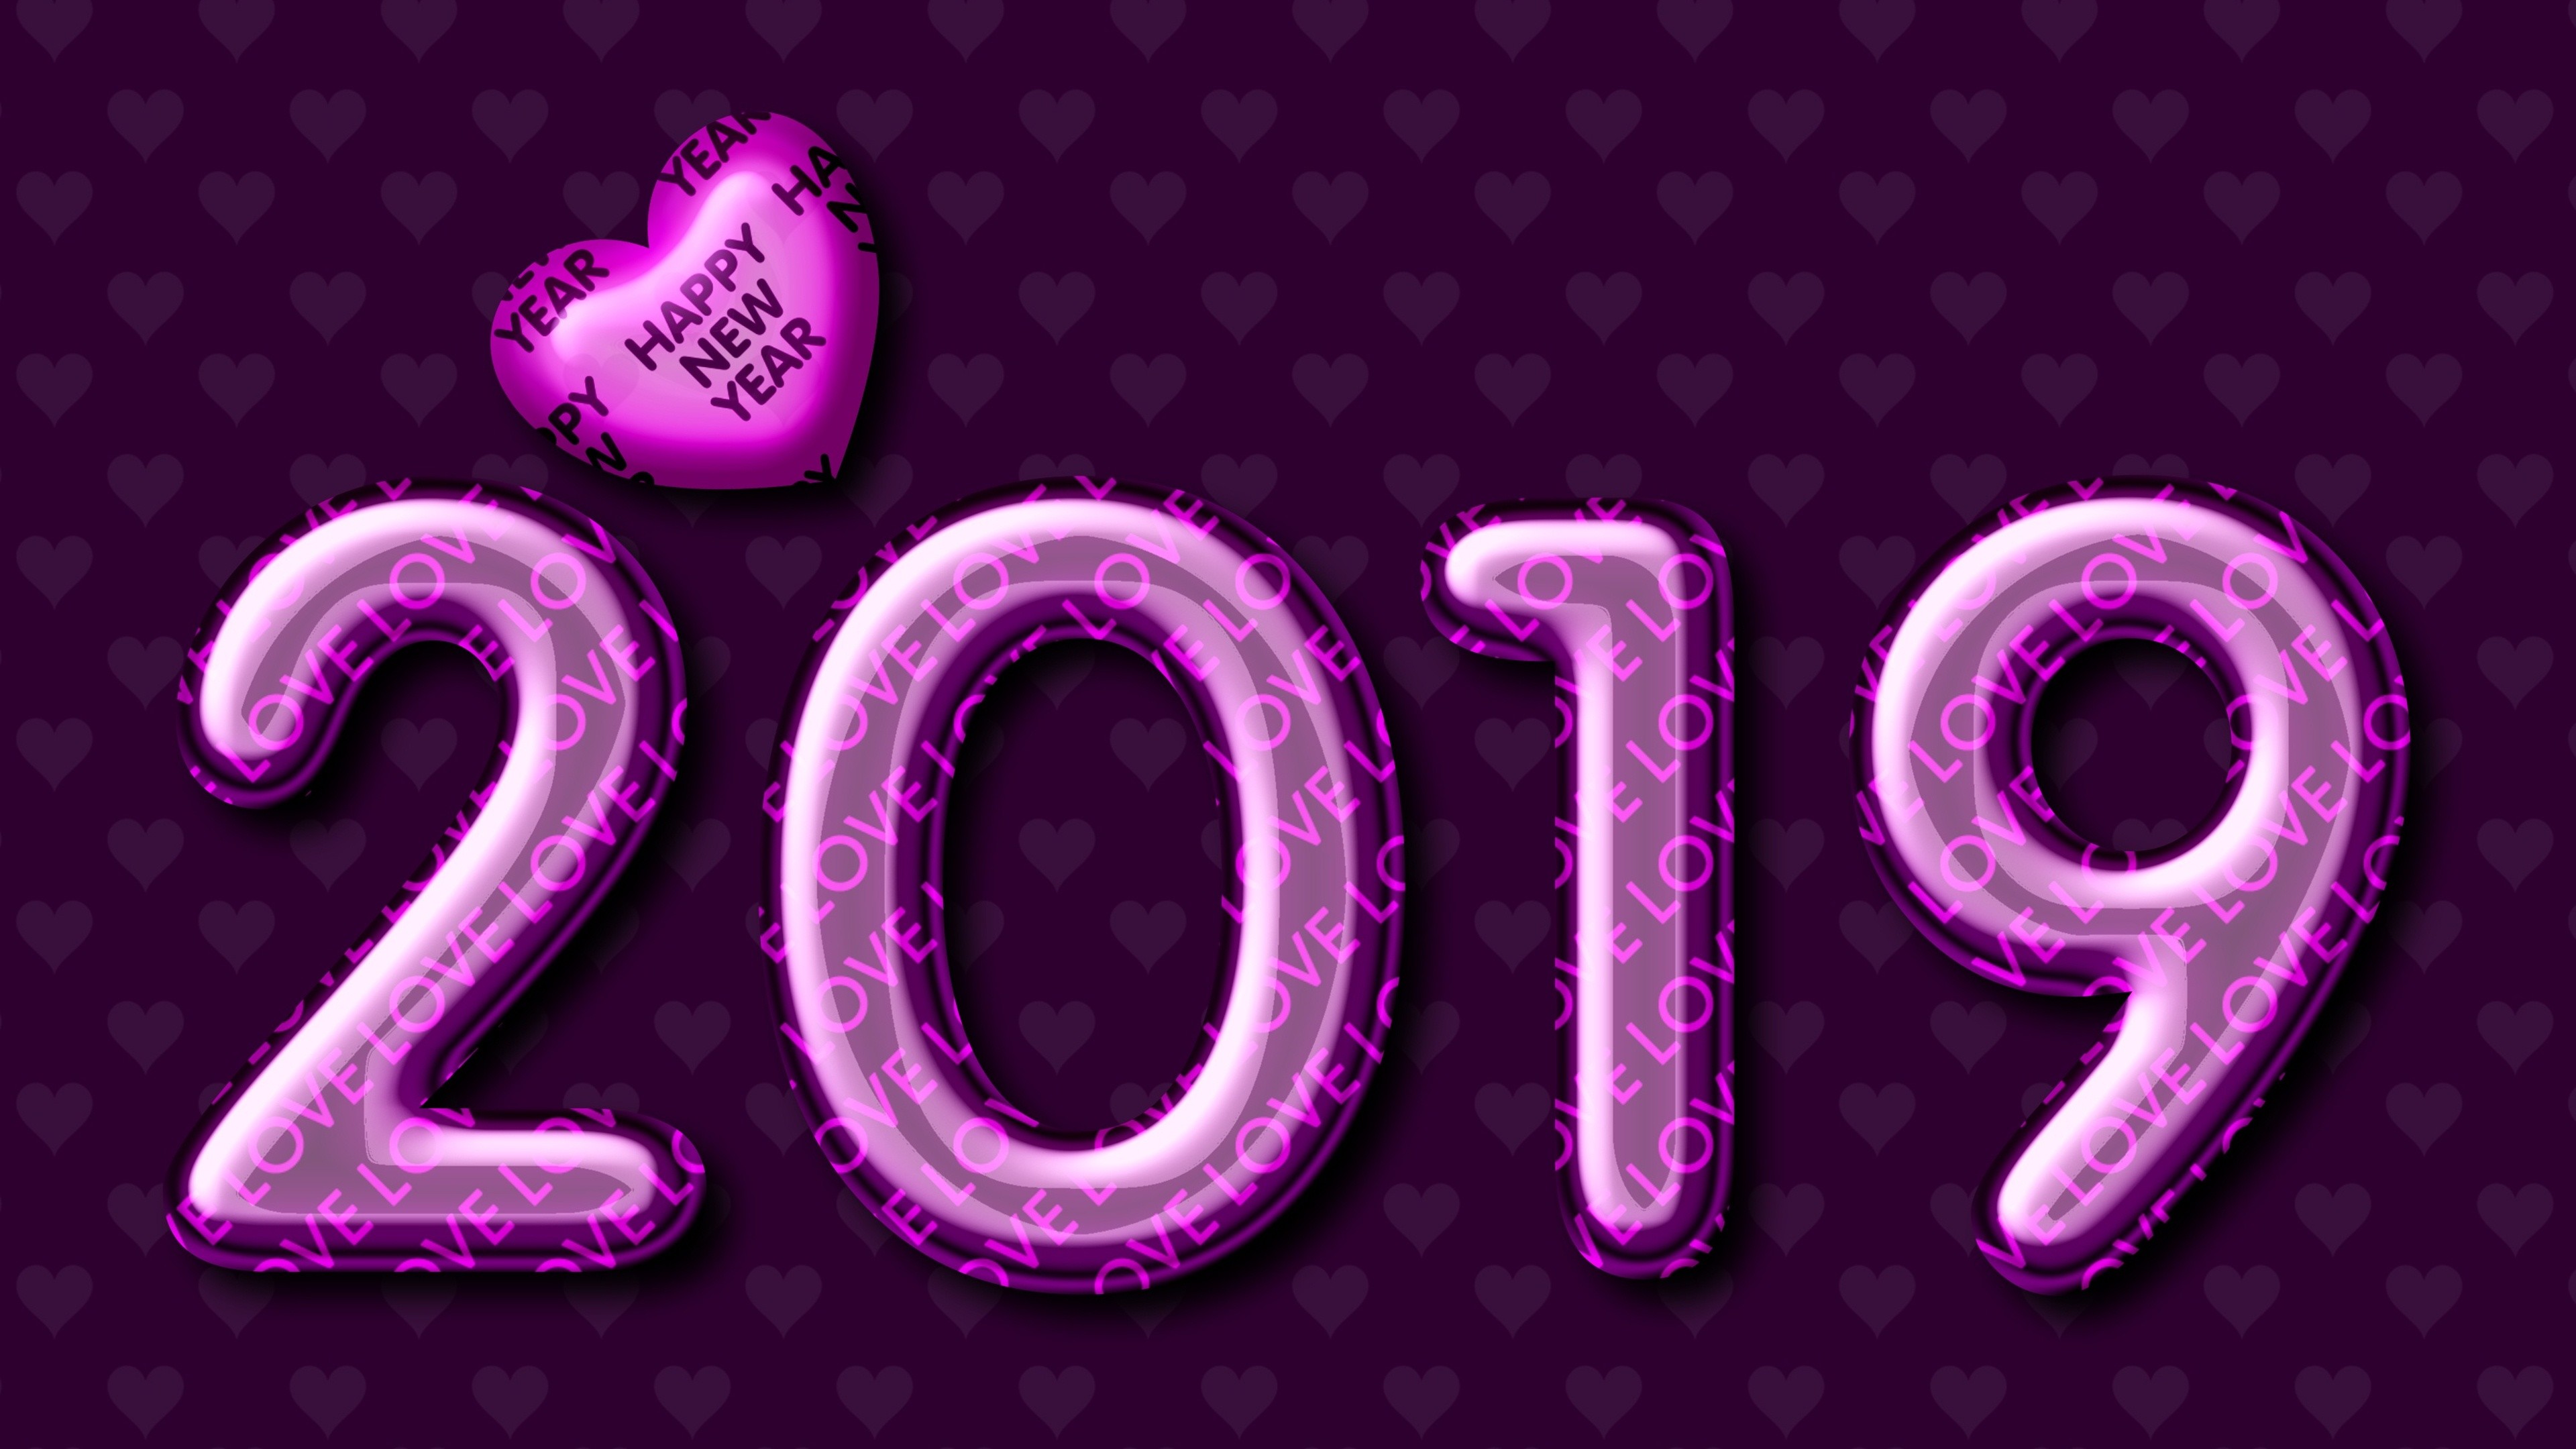 3840x2160 4K 2019 New Year Love Greeting Card Wallpaper 38446